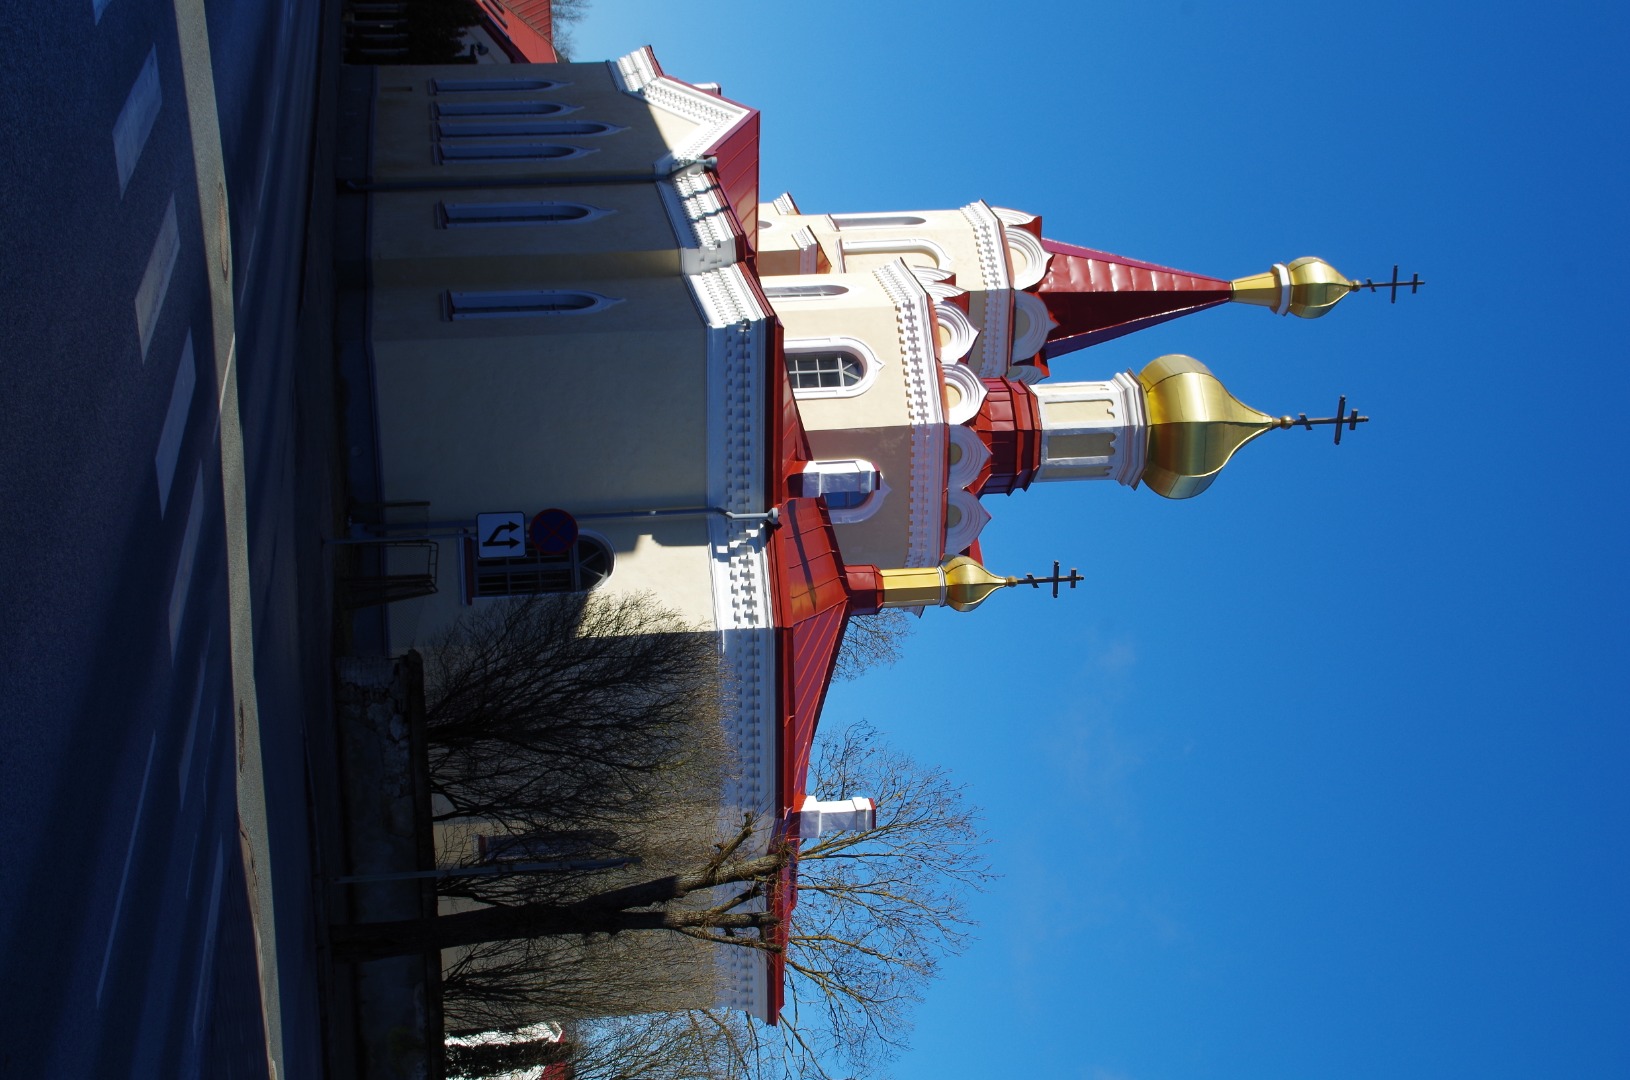 The church of the Apostle Orthodox of Rakvere rephoto